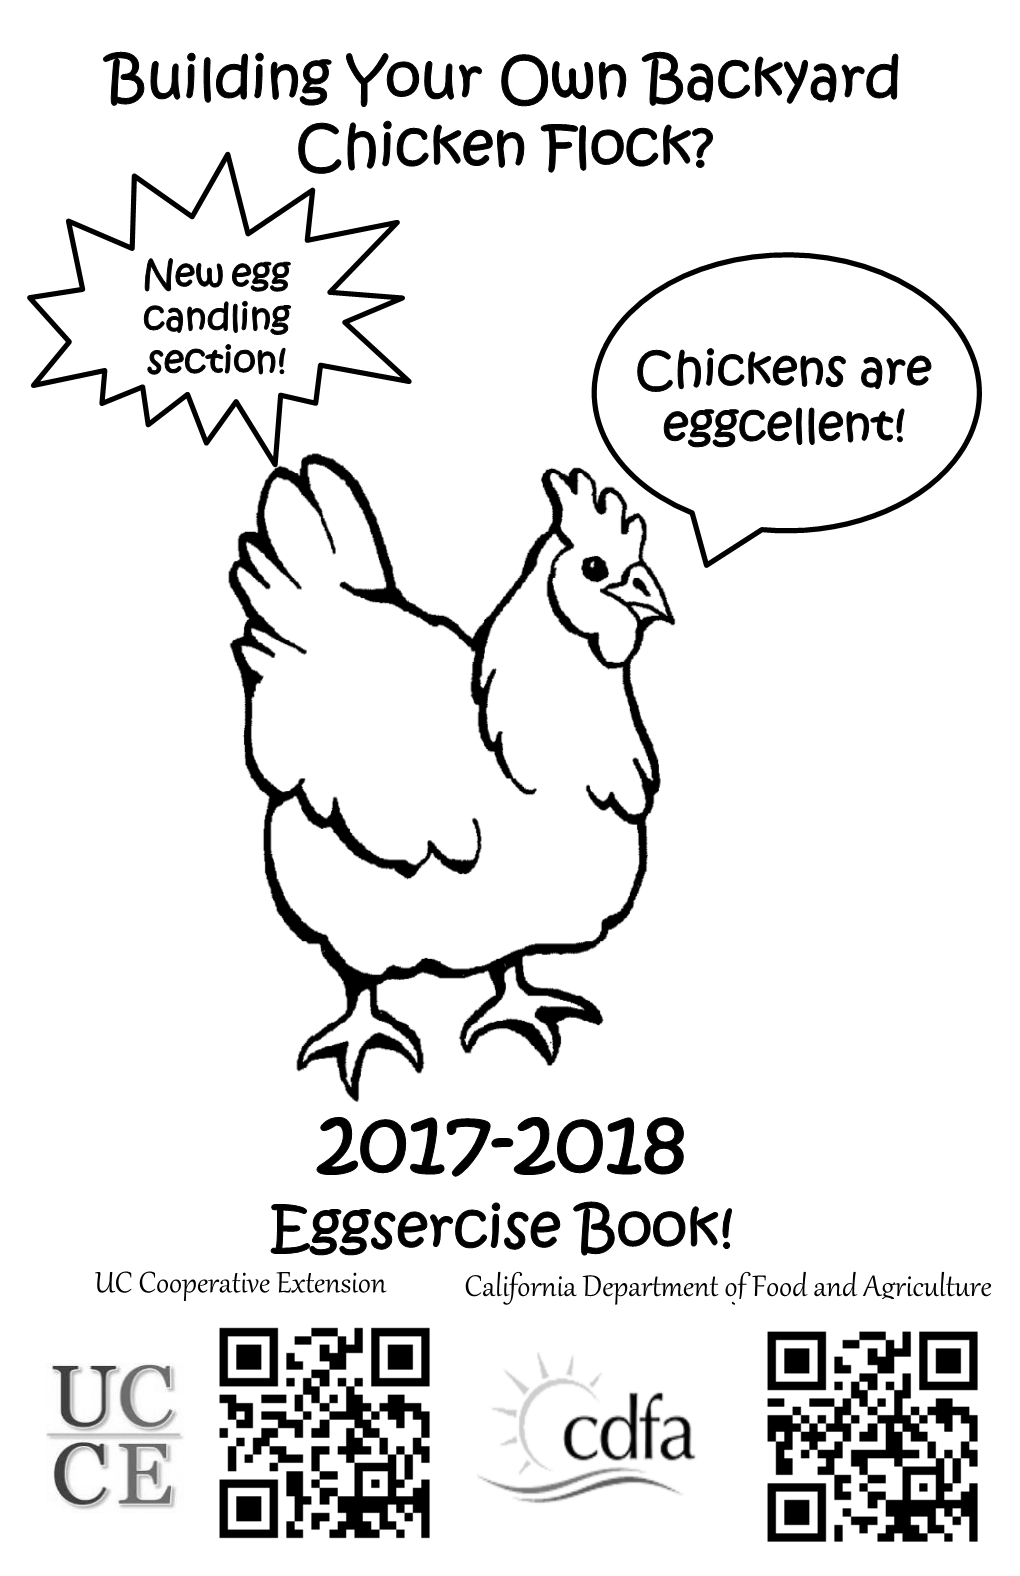 Eggsercise Book! Building Your Own Backyard Chicken Flock?